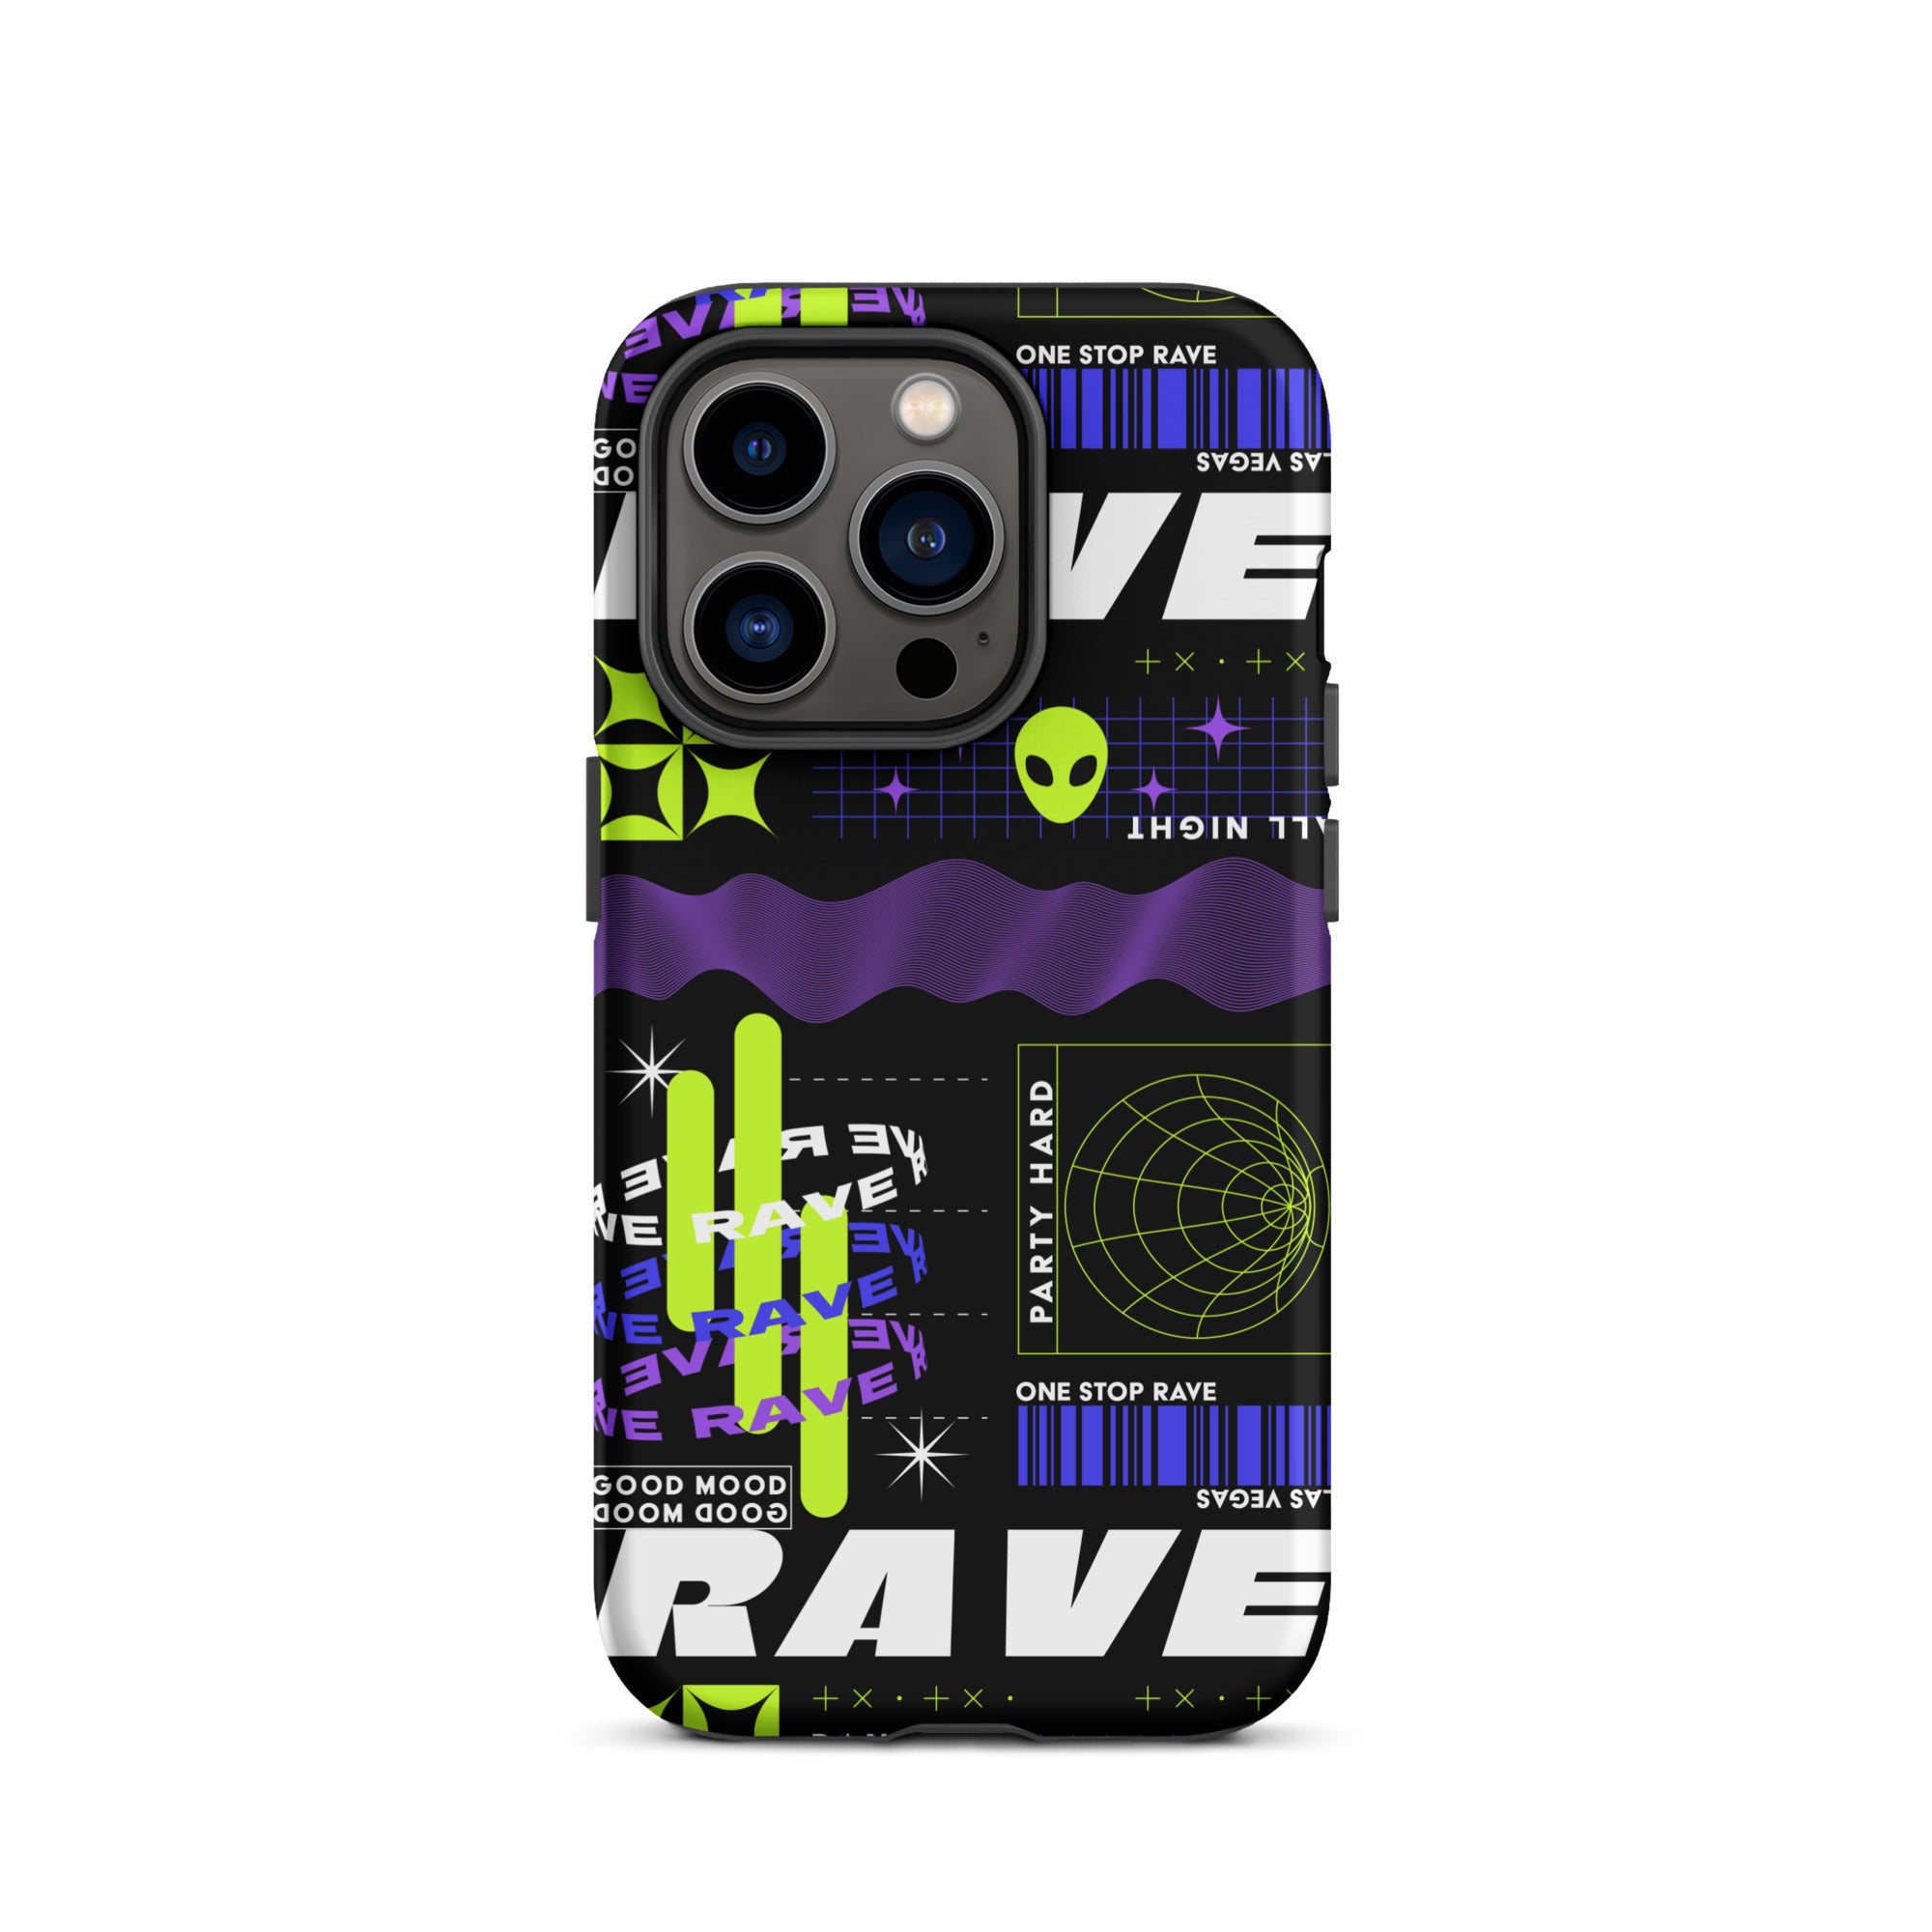 Retro Rave Tough Case for iPhone®